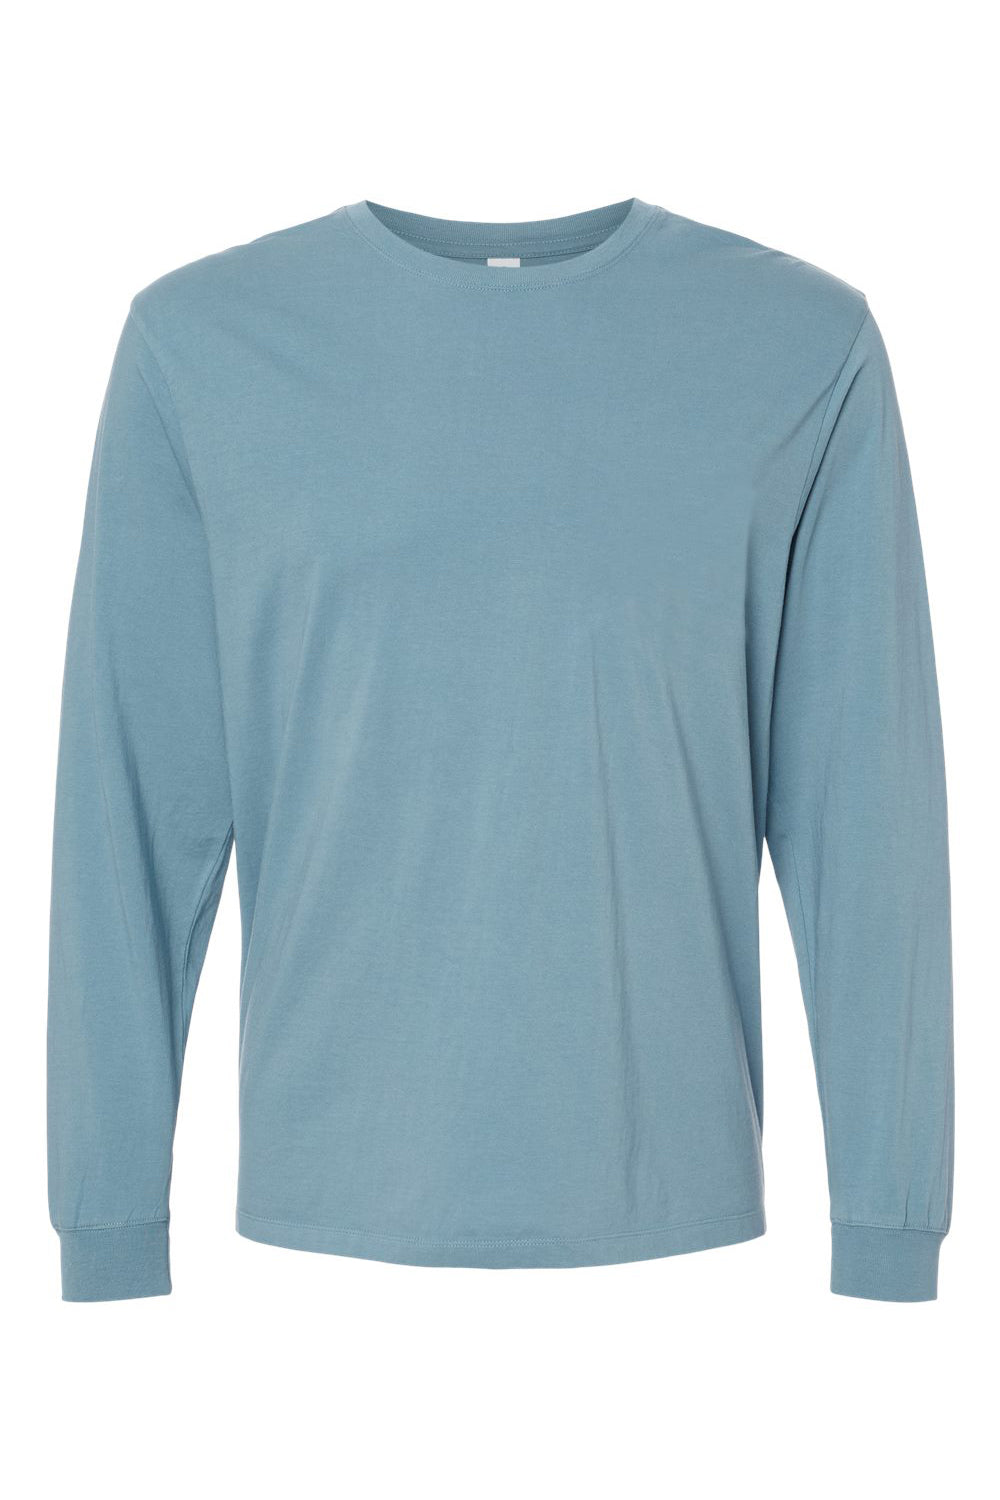 SoftShirts 420 Mens Organic Long Sleeve Crewneck T-Shirt Slate Blue Flat Front